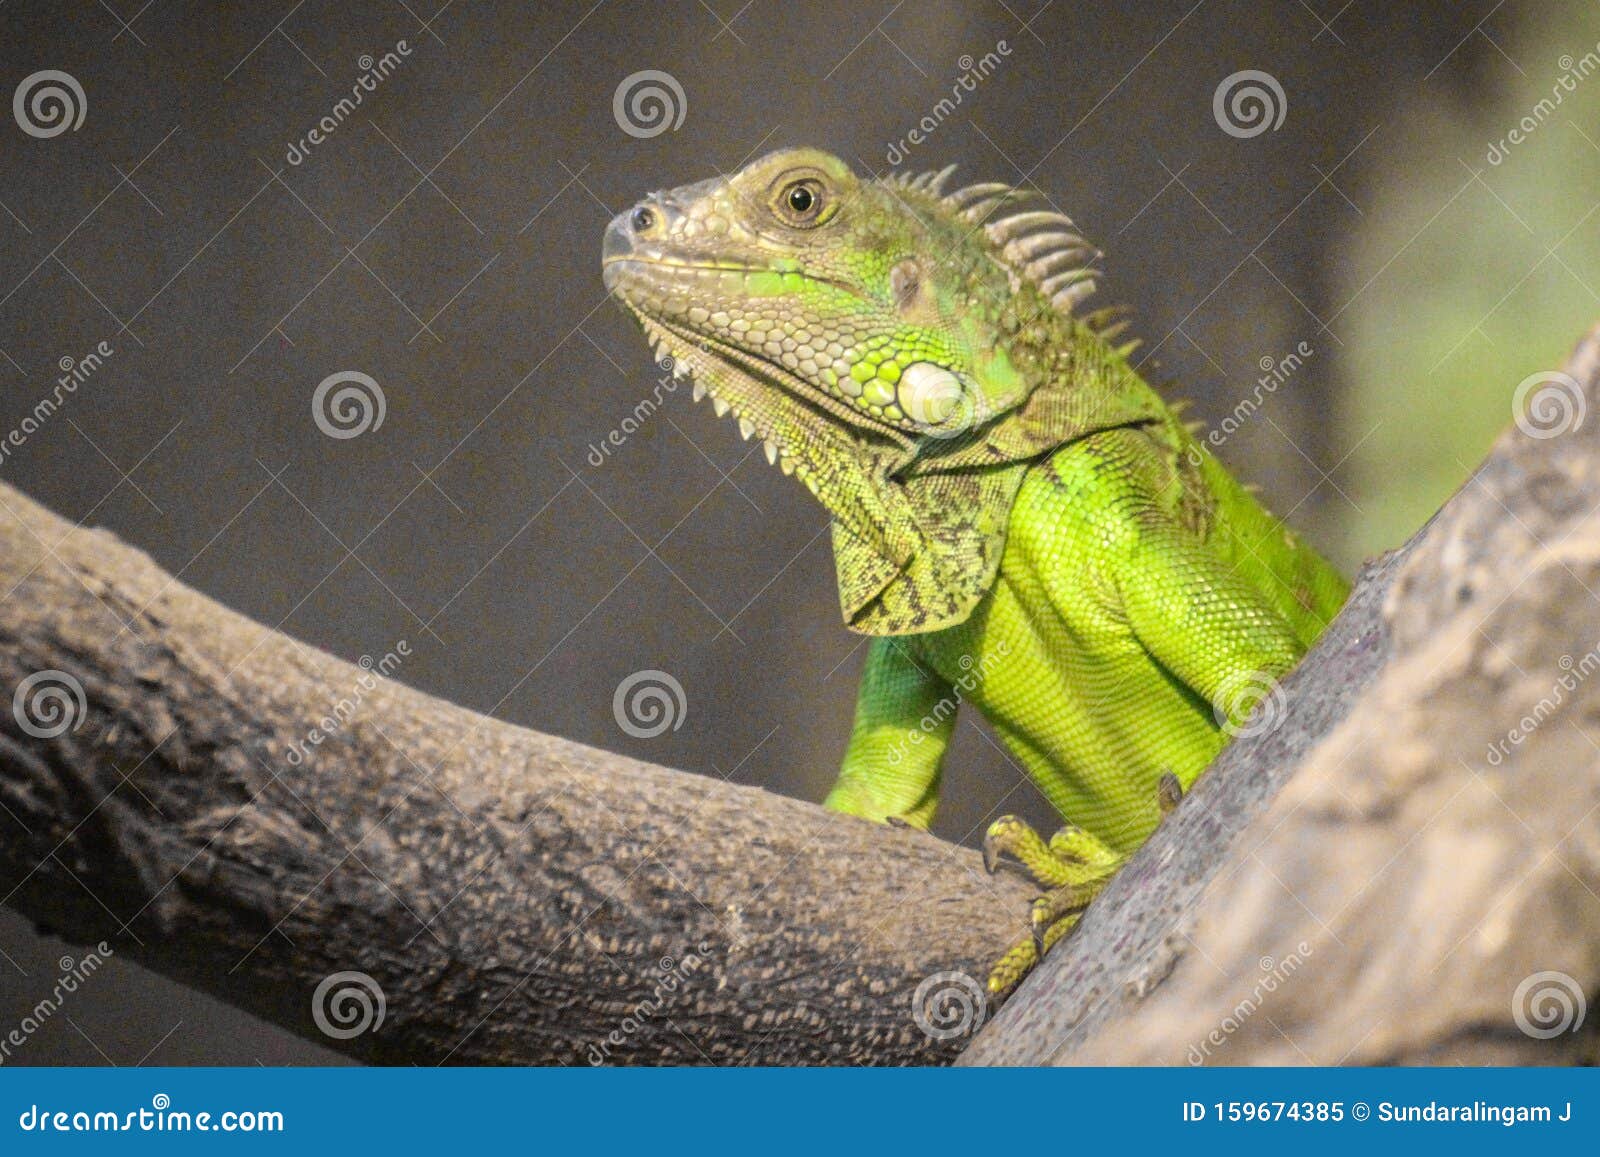 the beautiful green iguana